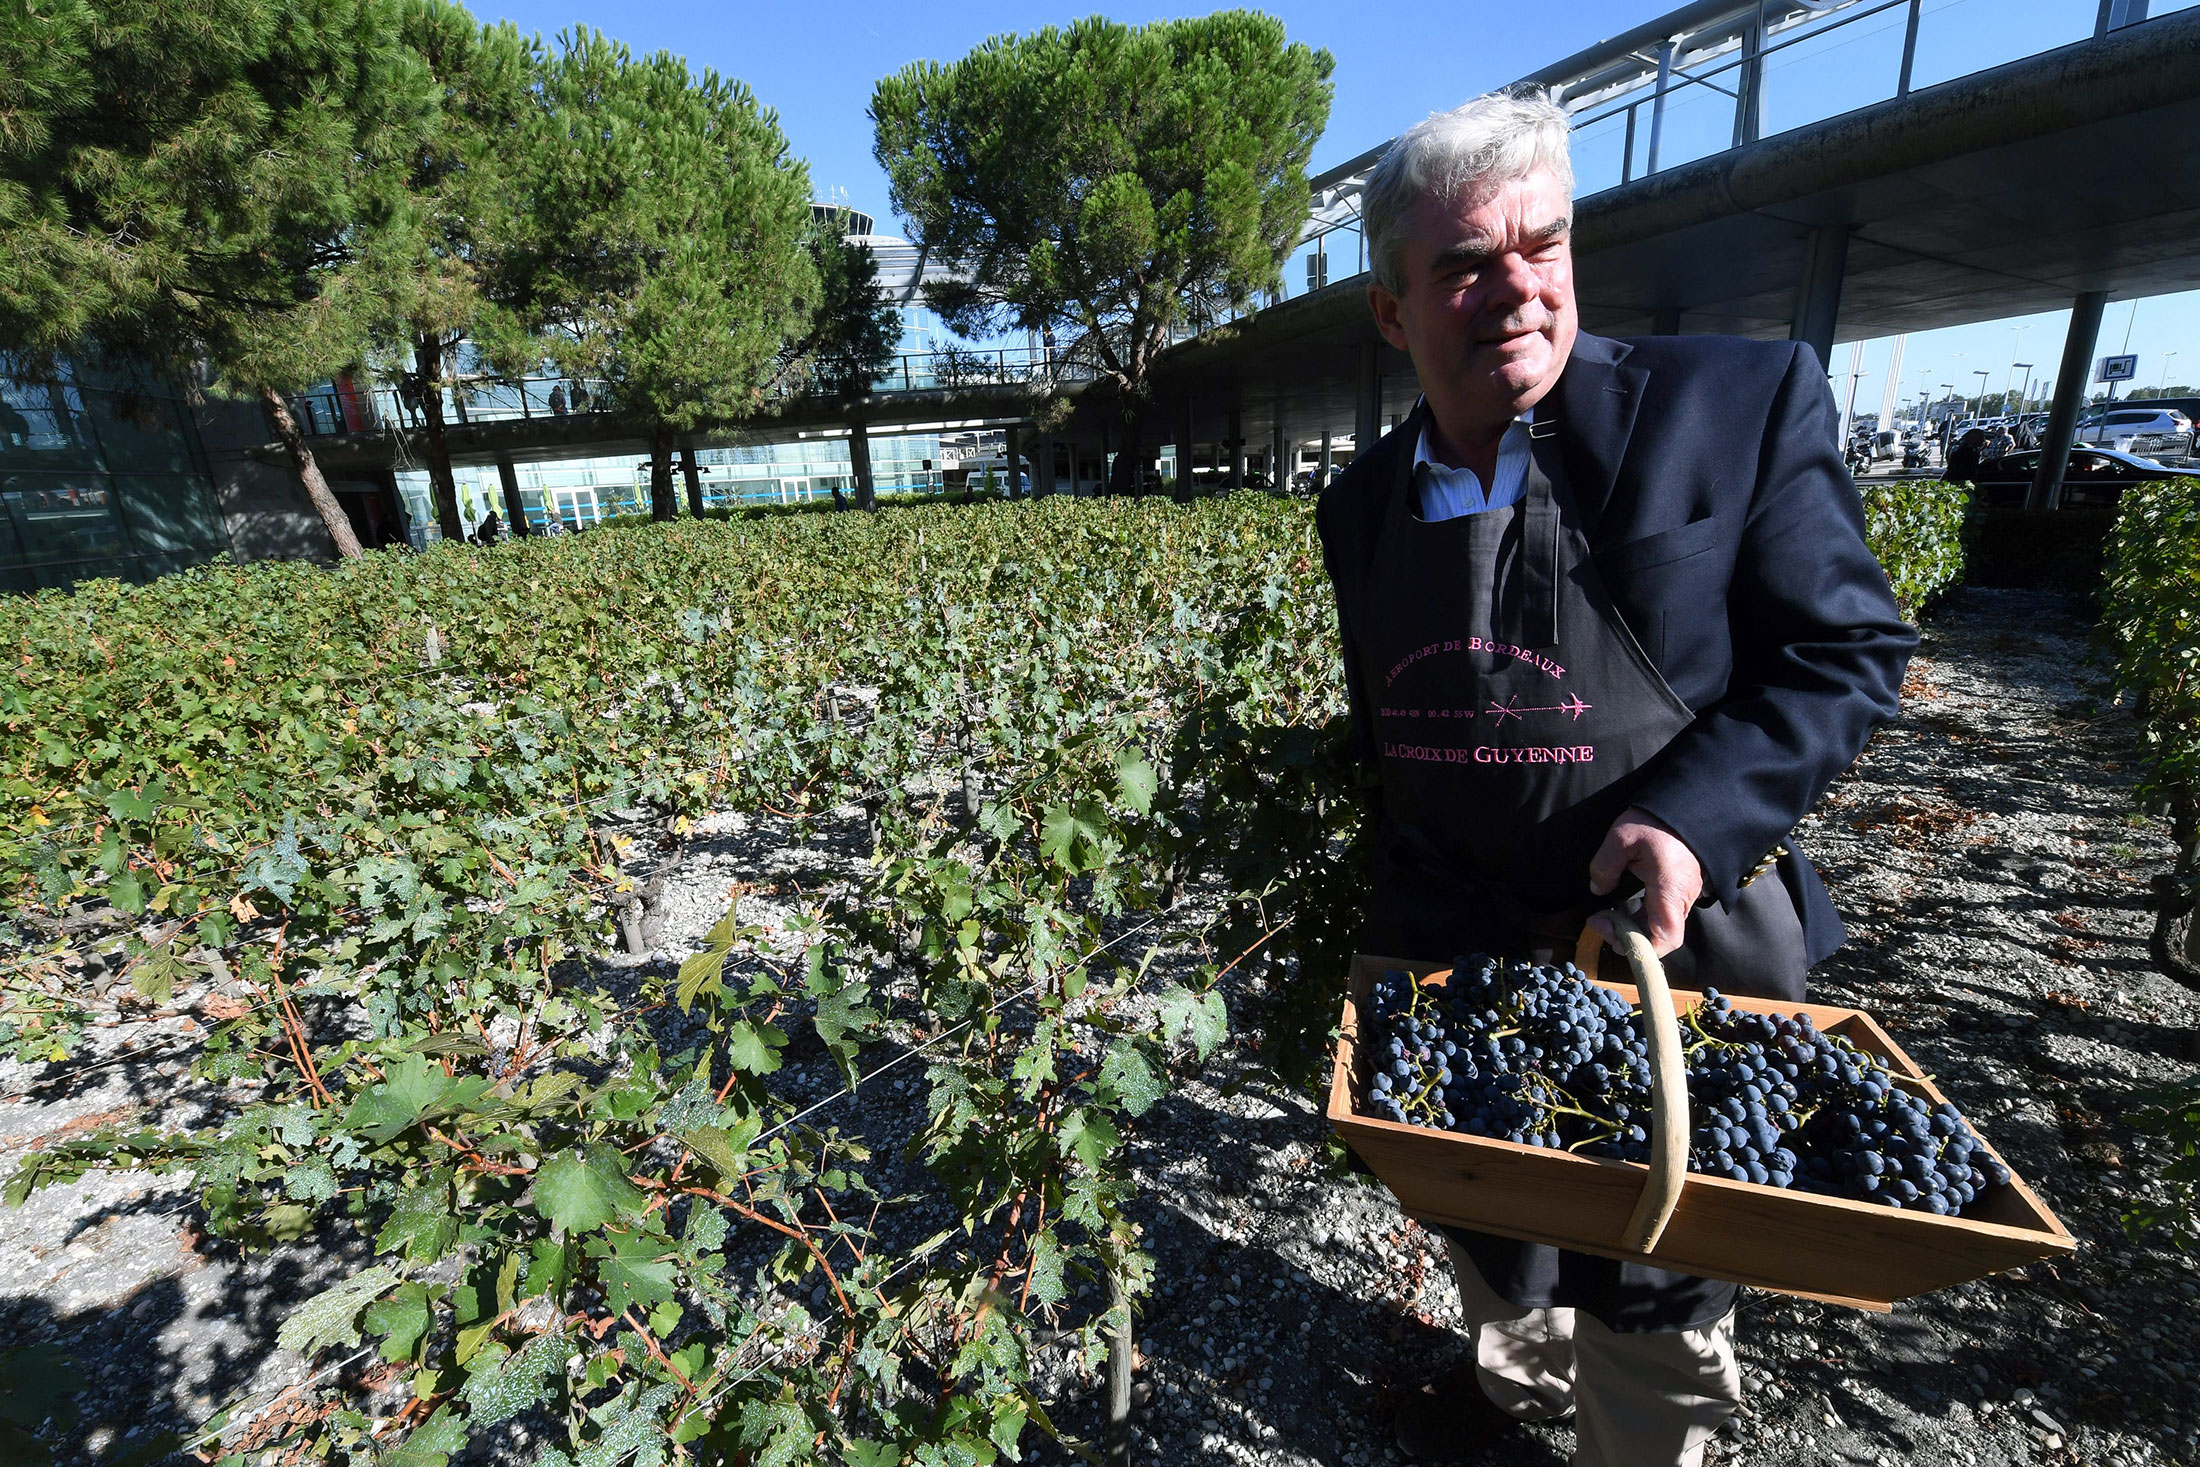 Olivier Bernard takes part in a grape harvest at a vineyard near Bordeaux.